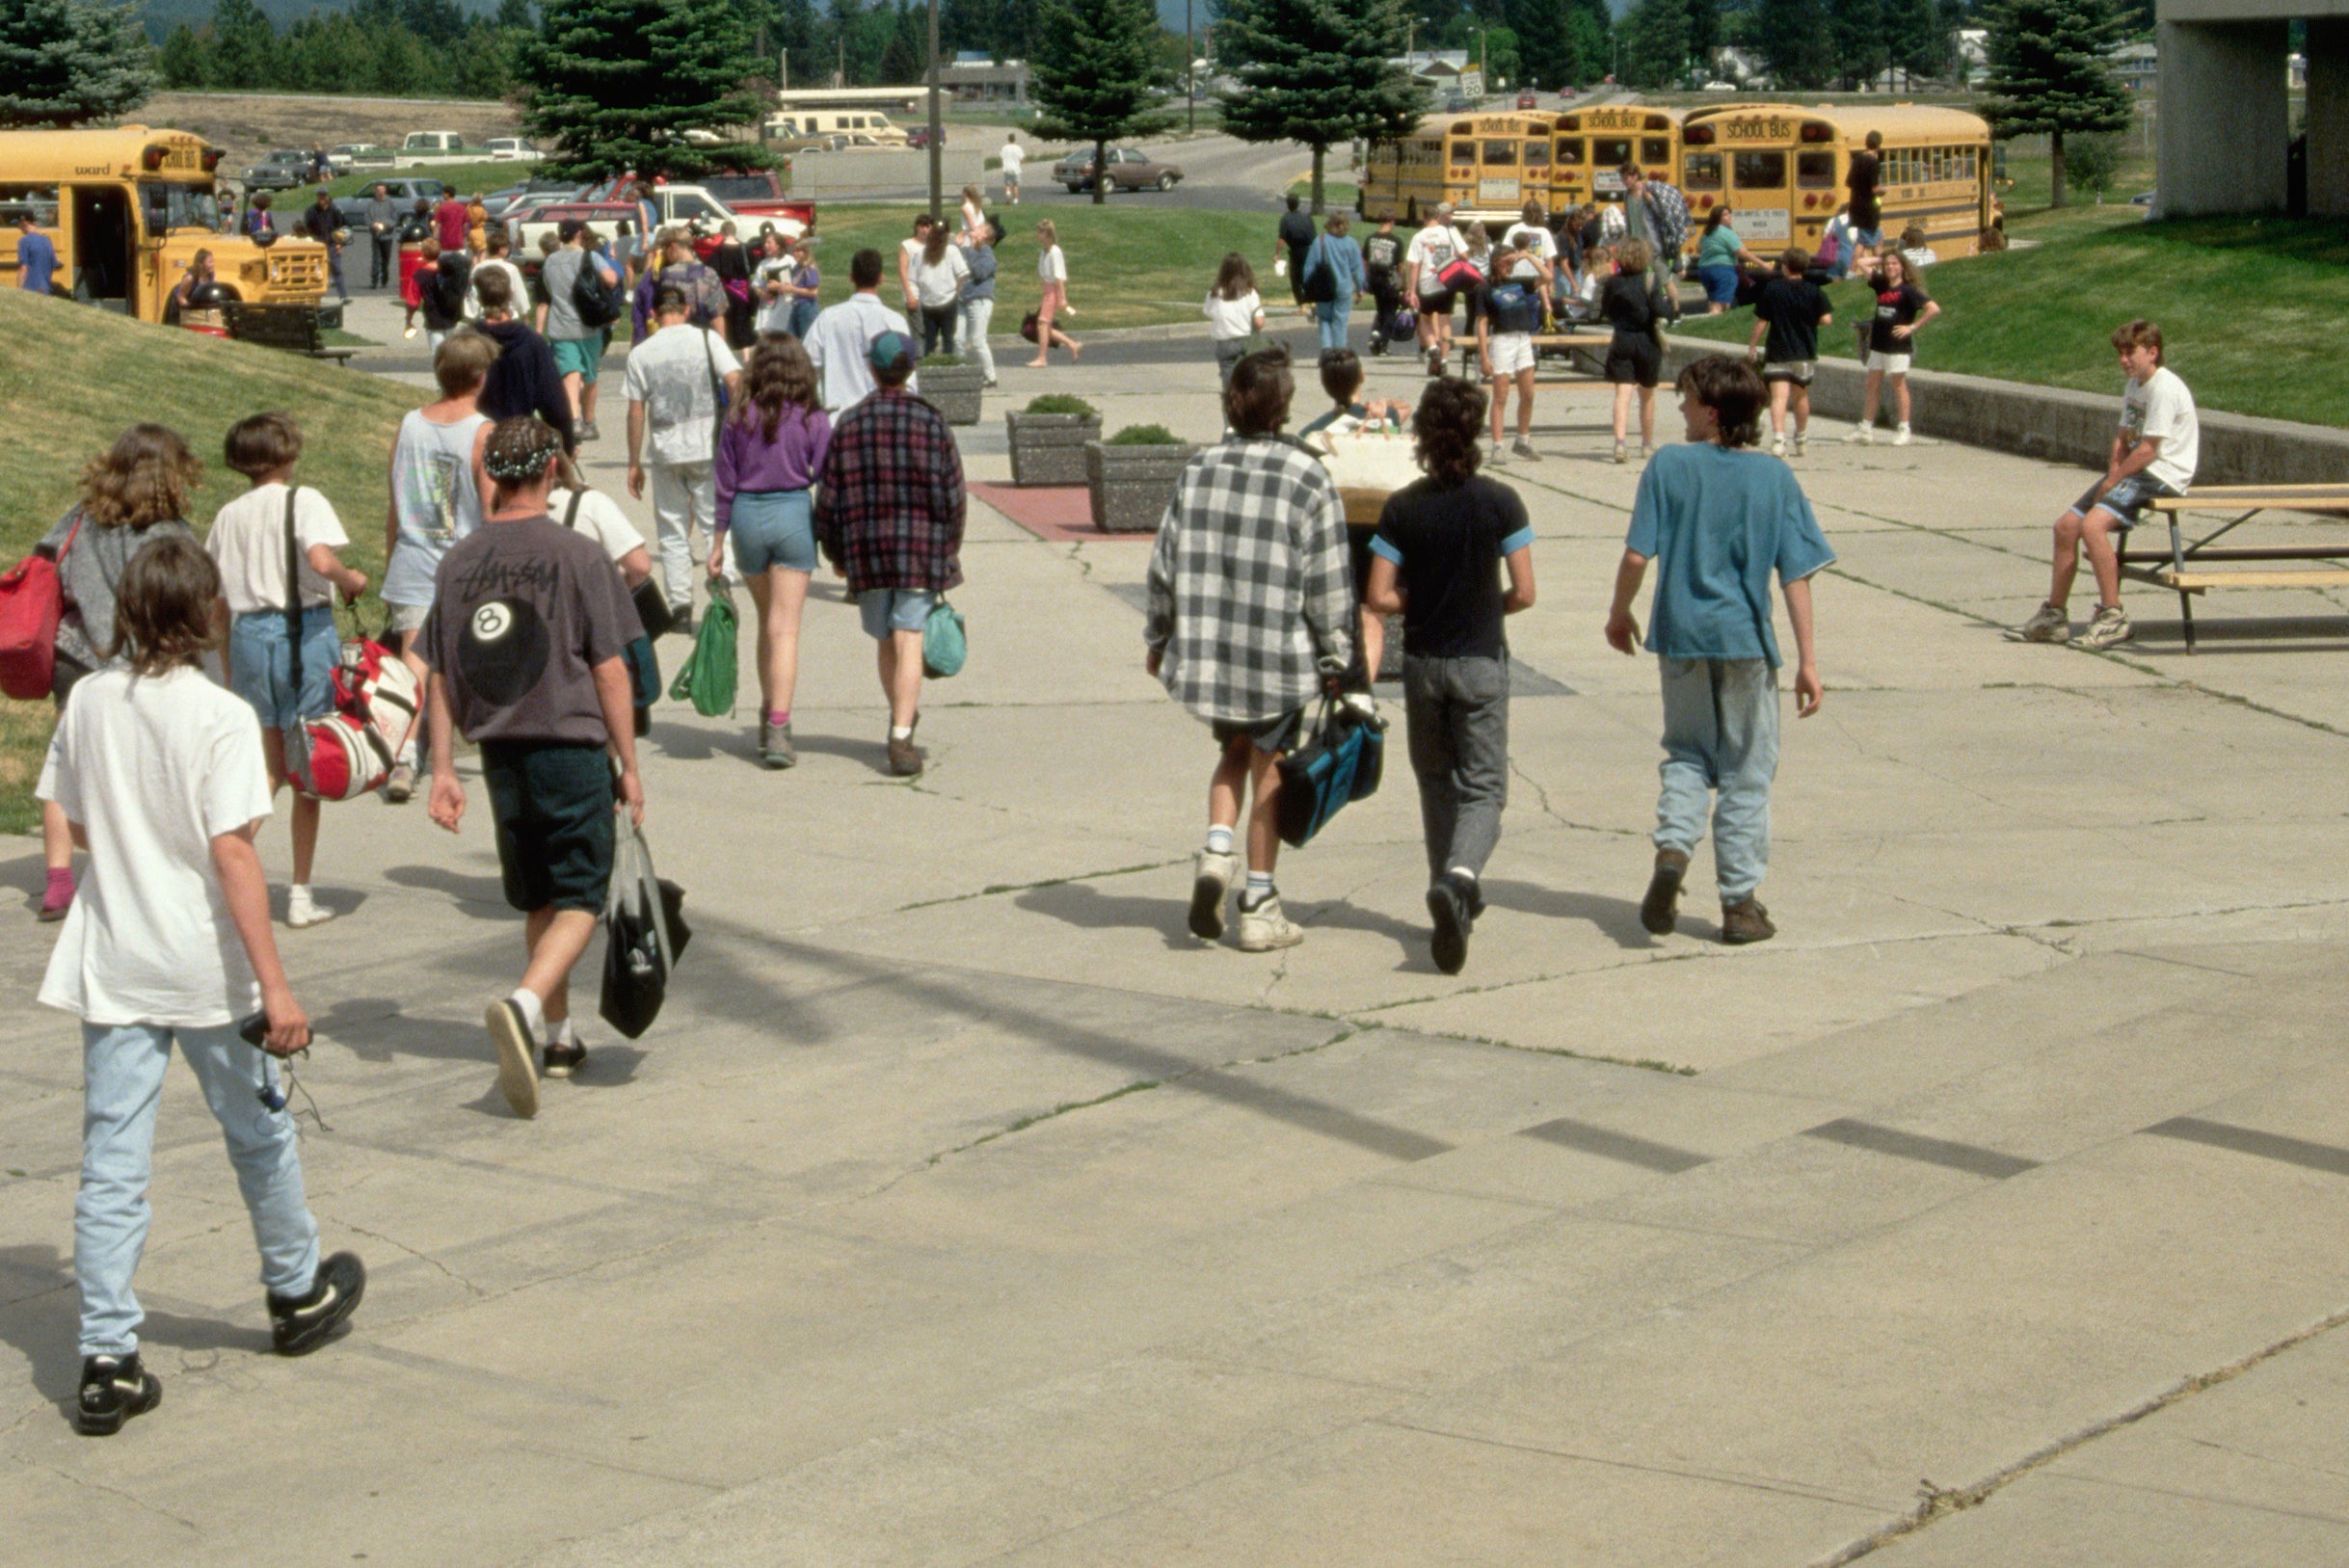 Kids heading to school buses